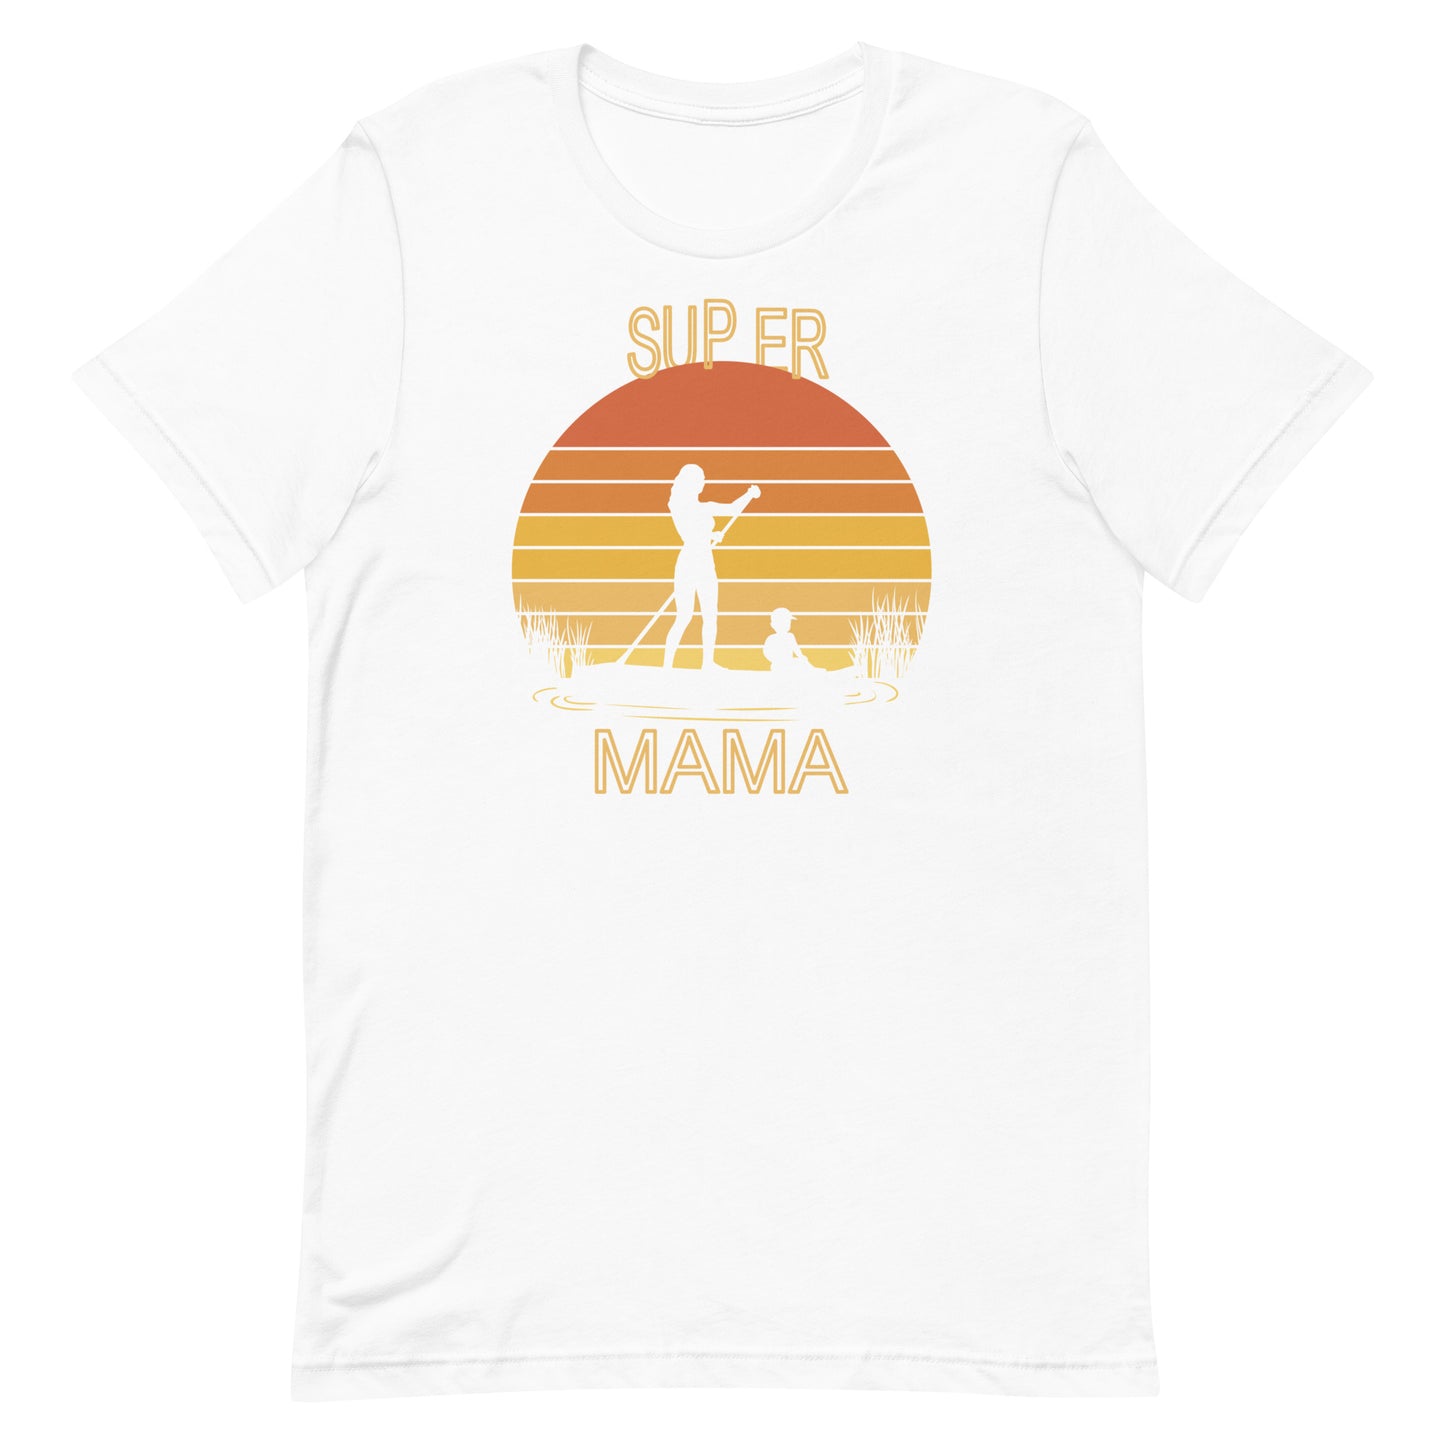 SUP ER MAMA T-Shirt